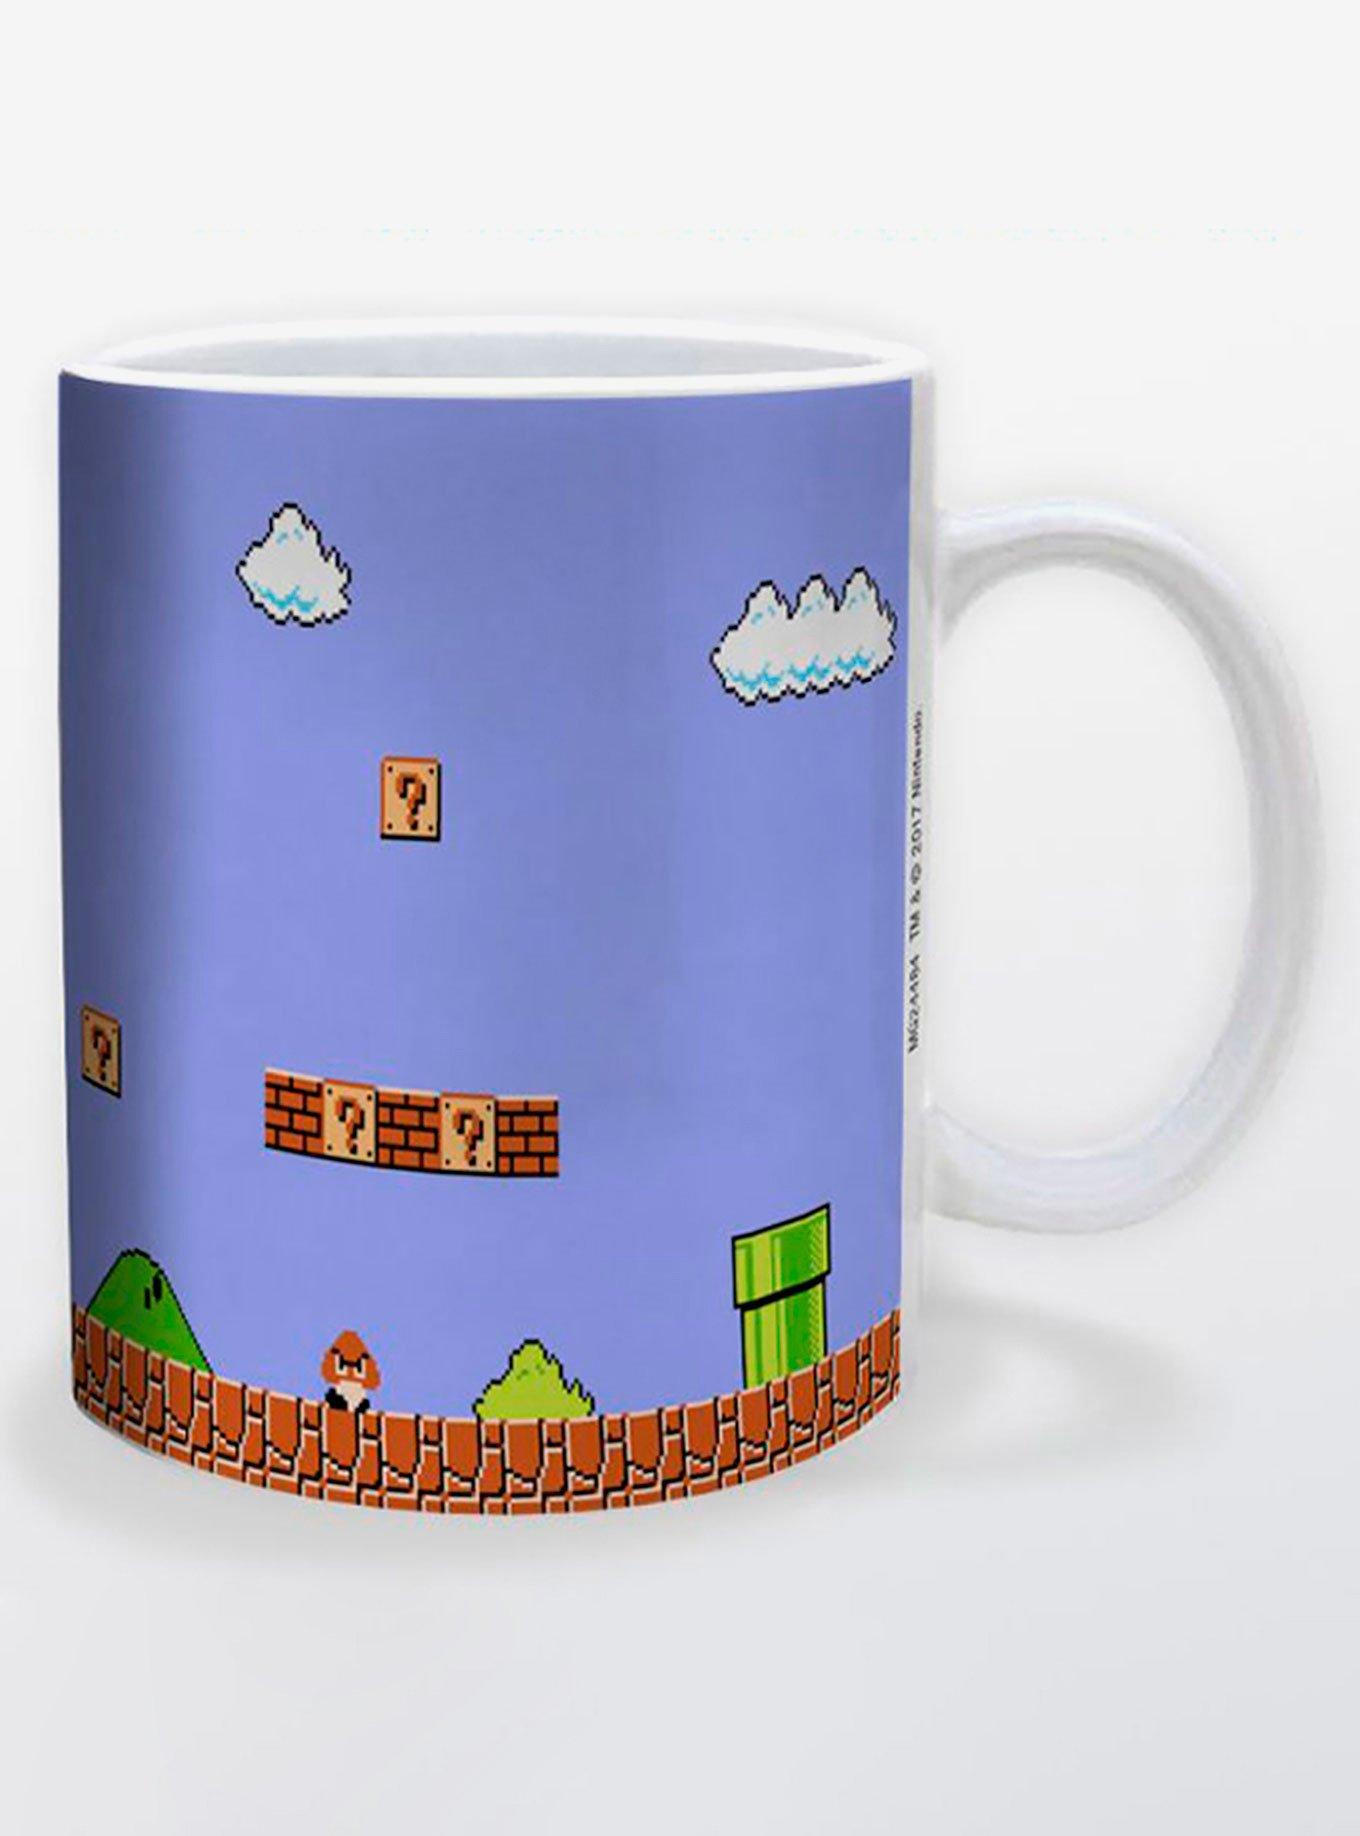 Nintendo Super Mario Bros. Retro Title Mug, , hi-res